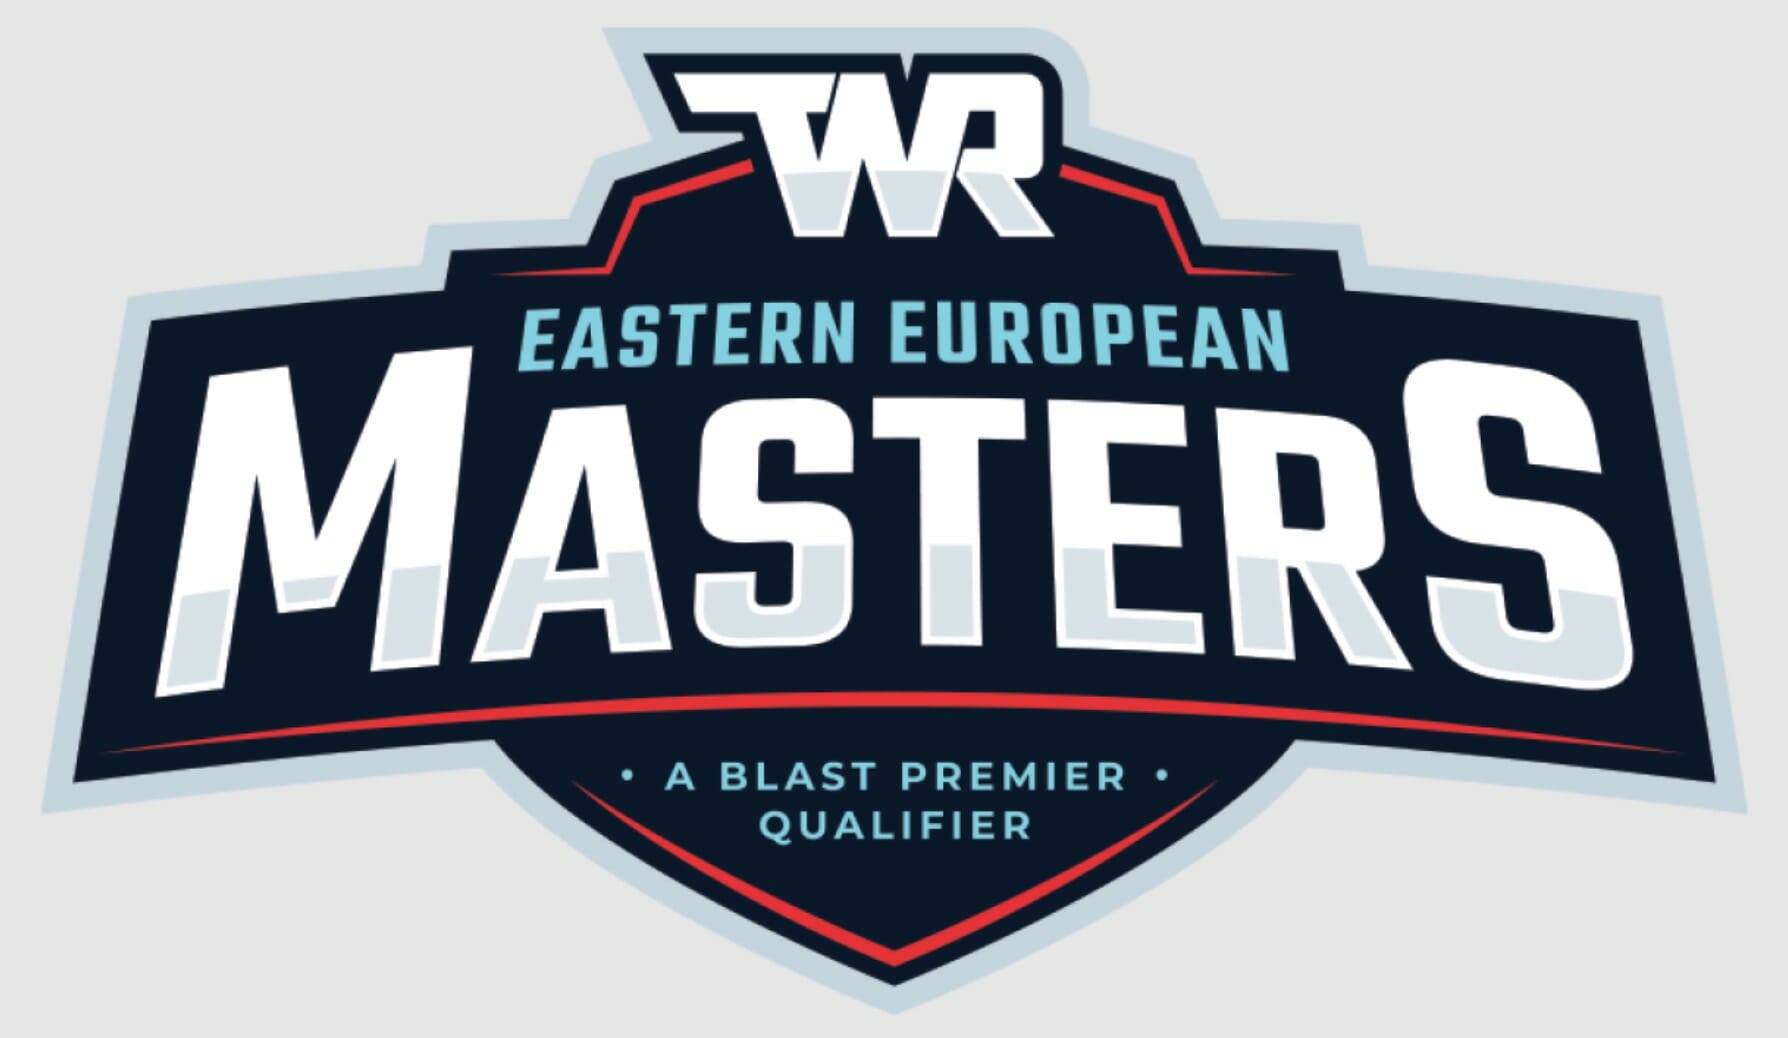 TWR Eastern European Masters hösten 2023